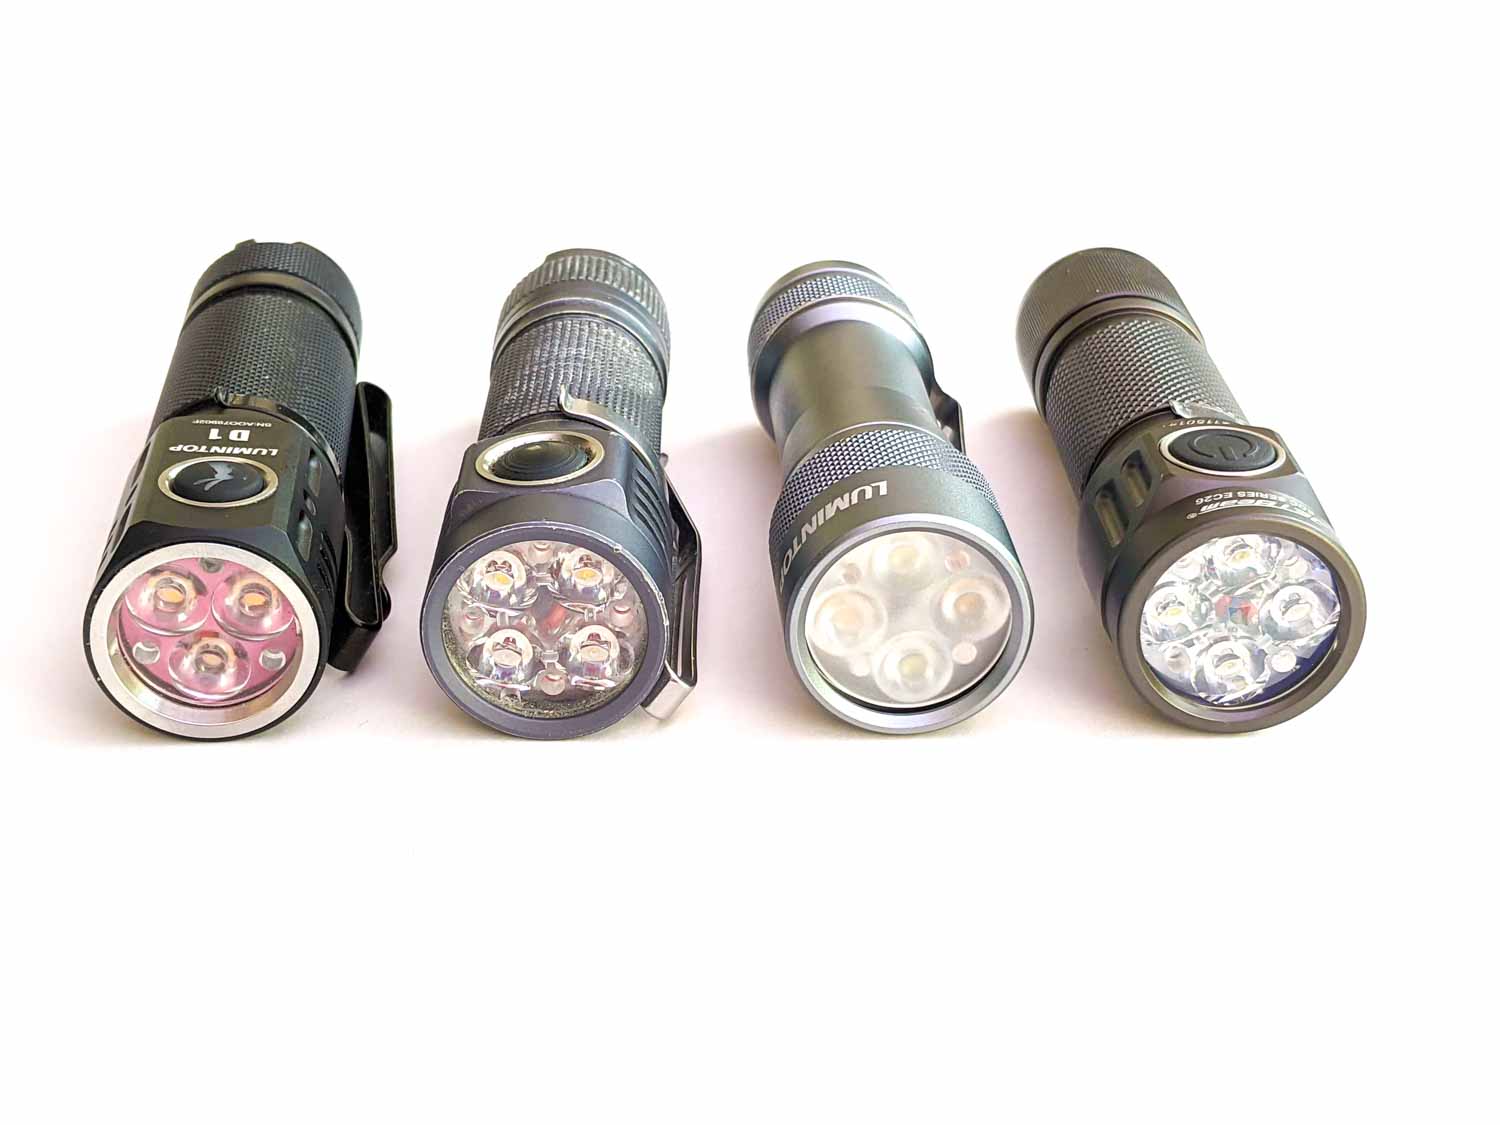 flashlights compared